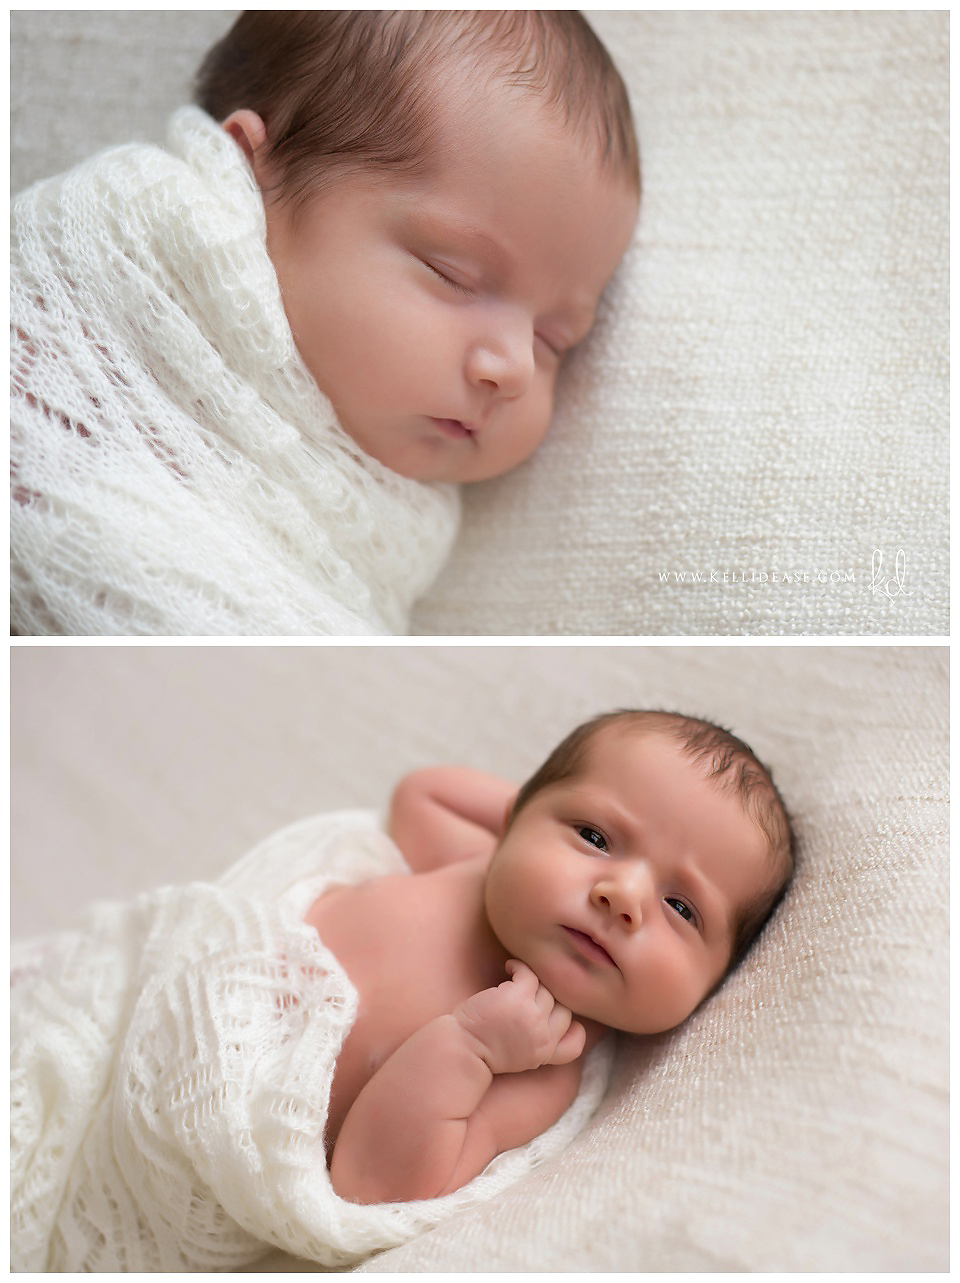 Simple and natural professional newborn photos in soft neutral tones | Fairfield | Granby | Farmington | Burlington | Top CT newborn photographer Kelli Dease | www.kellidease.com